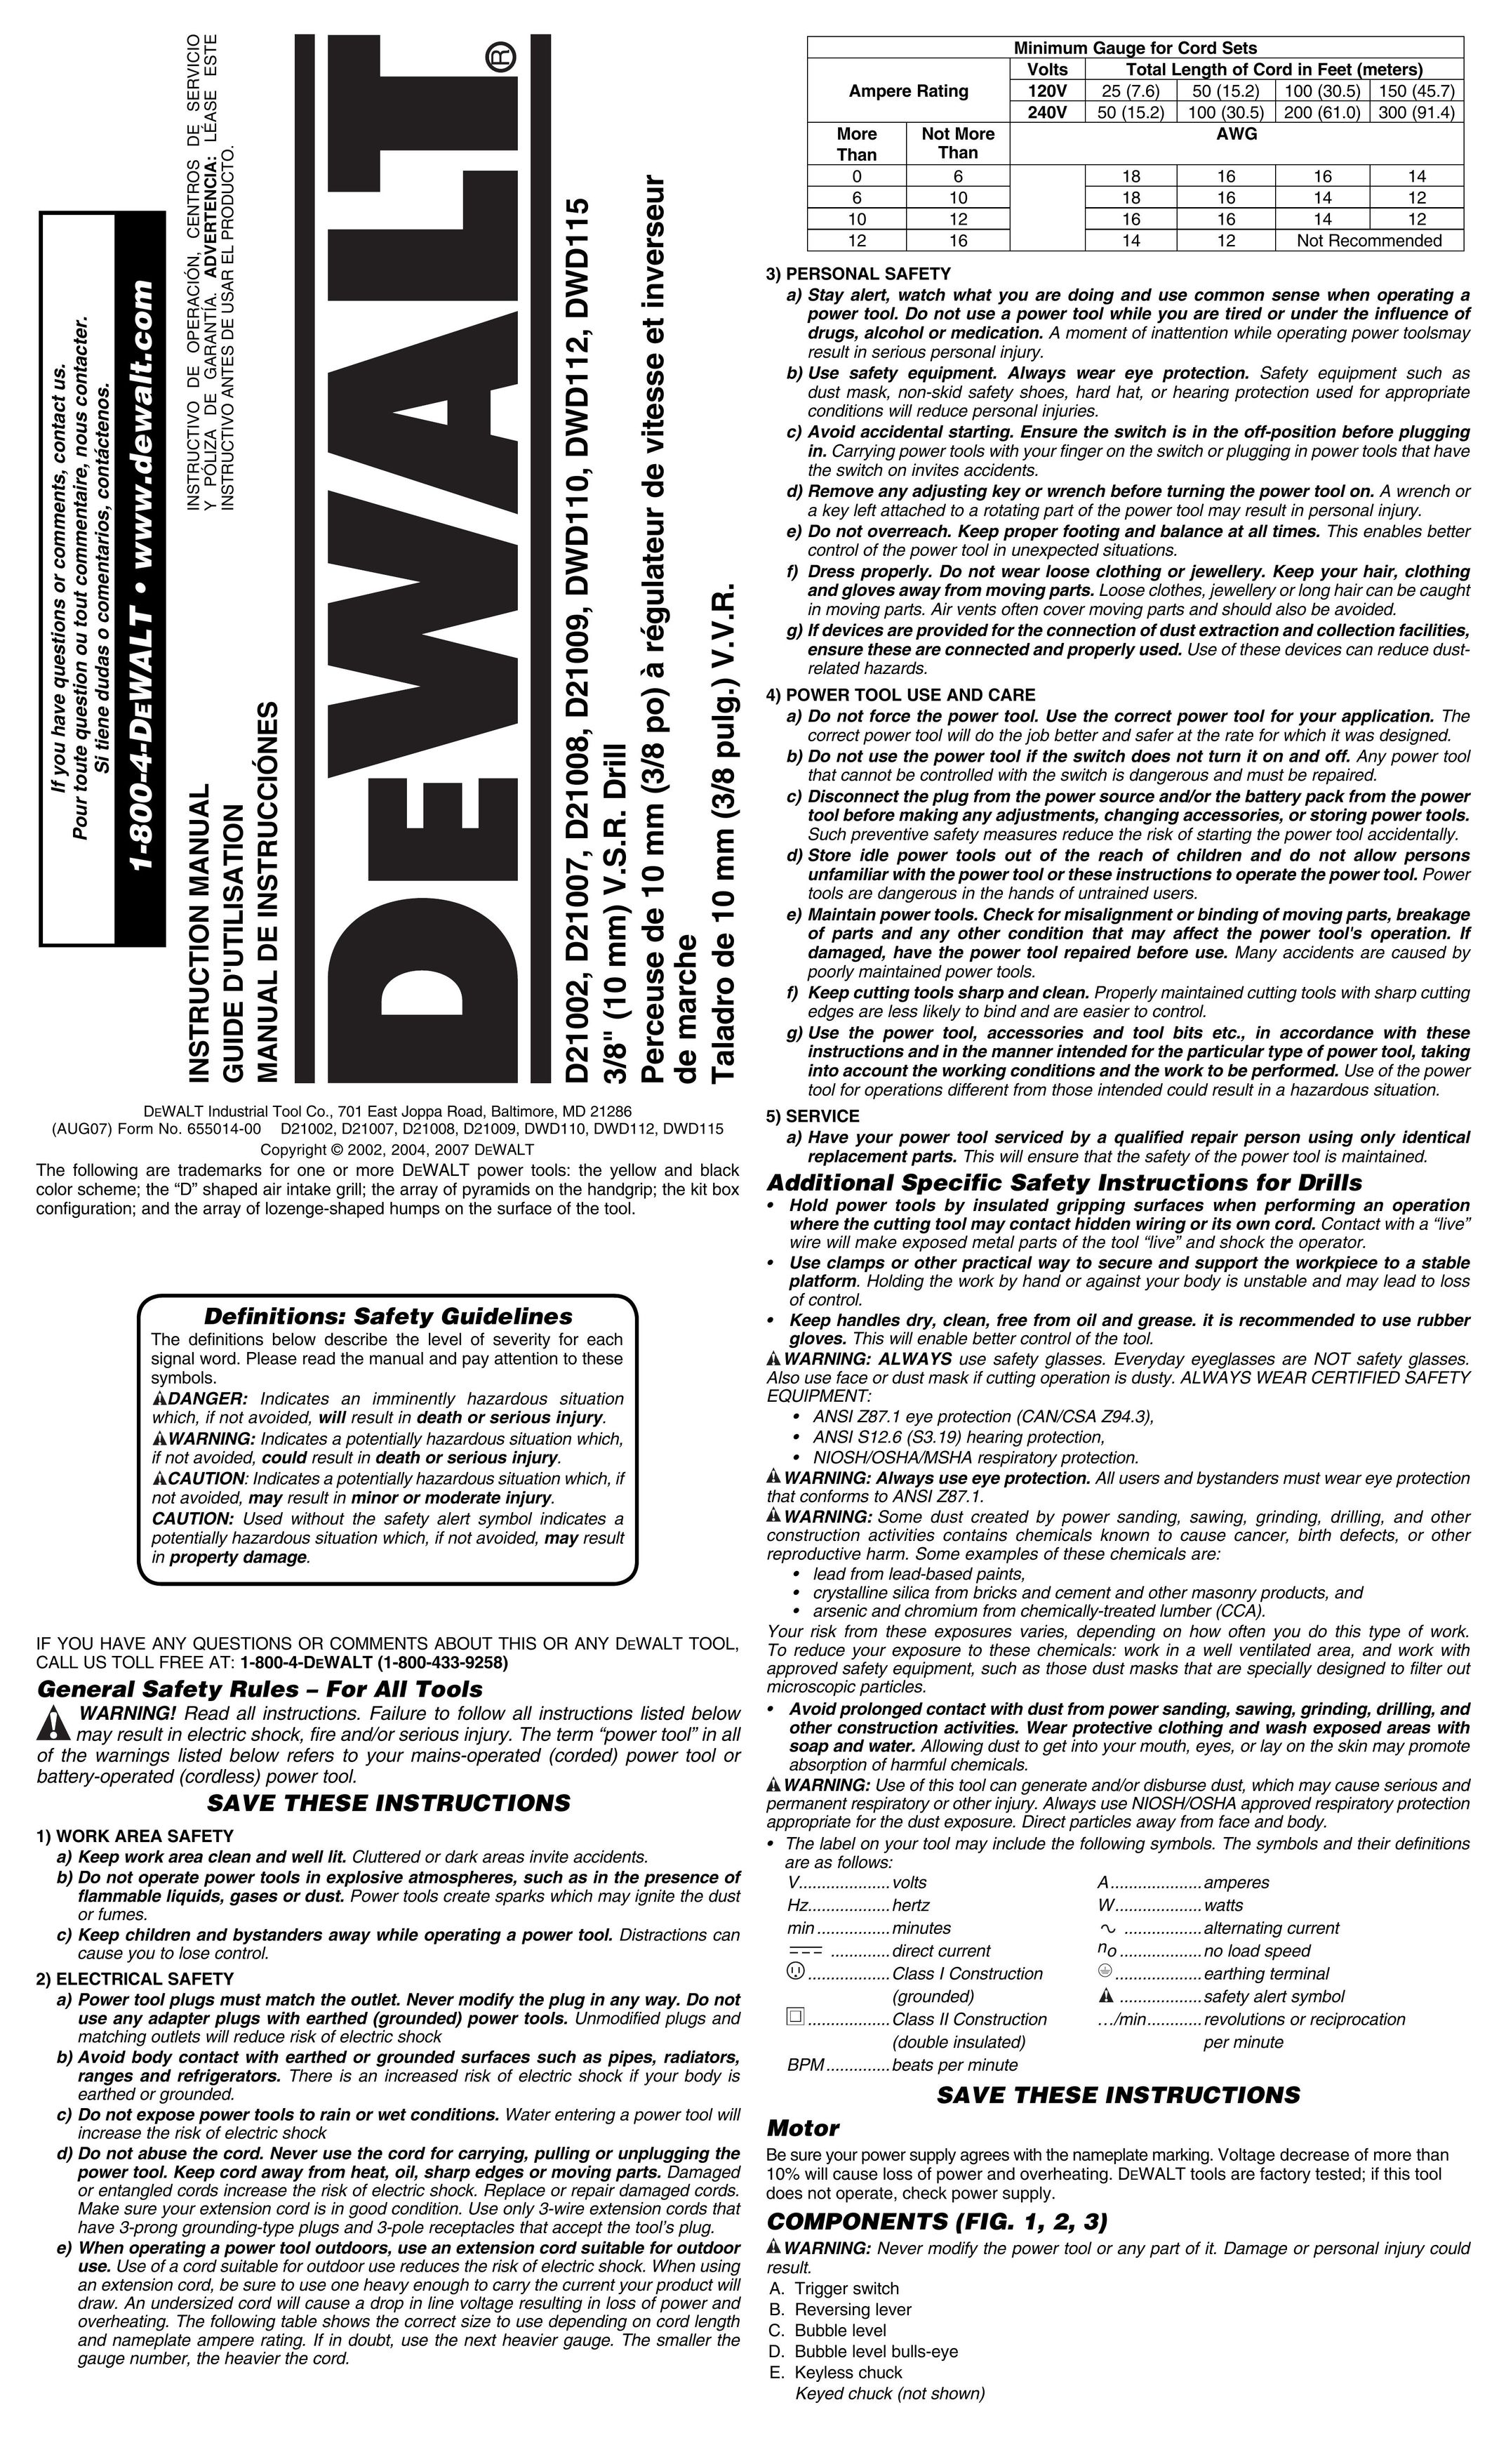 DeWalt D21002 Drill User Manual